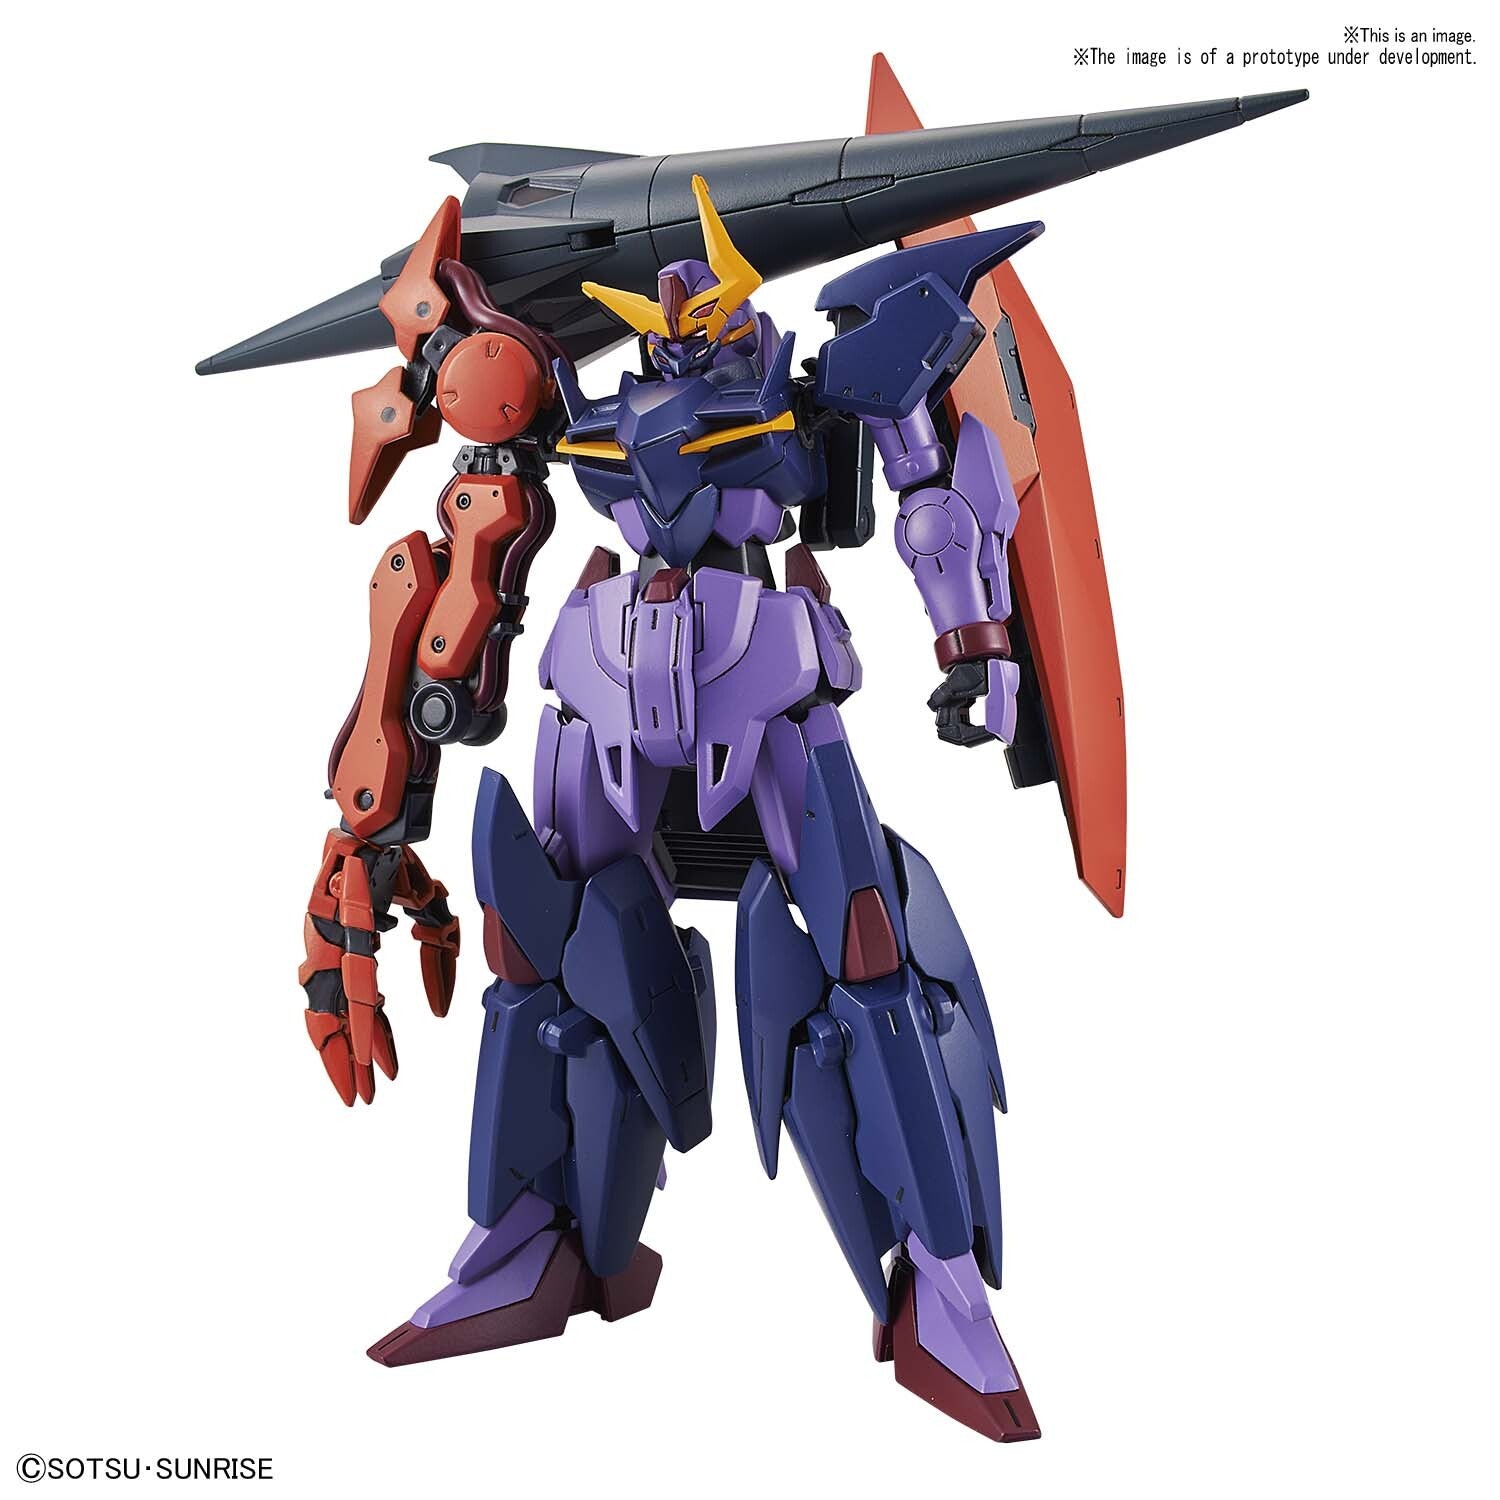 HGDB:R 1/144 #09 Gundam Seltsam #5058305 by Bandai